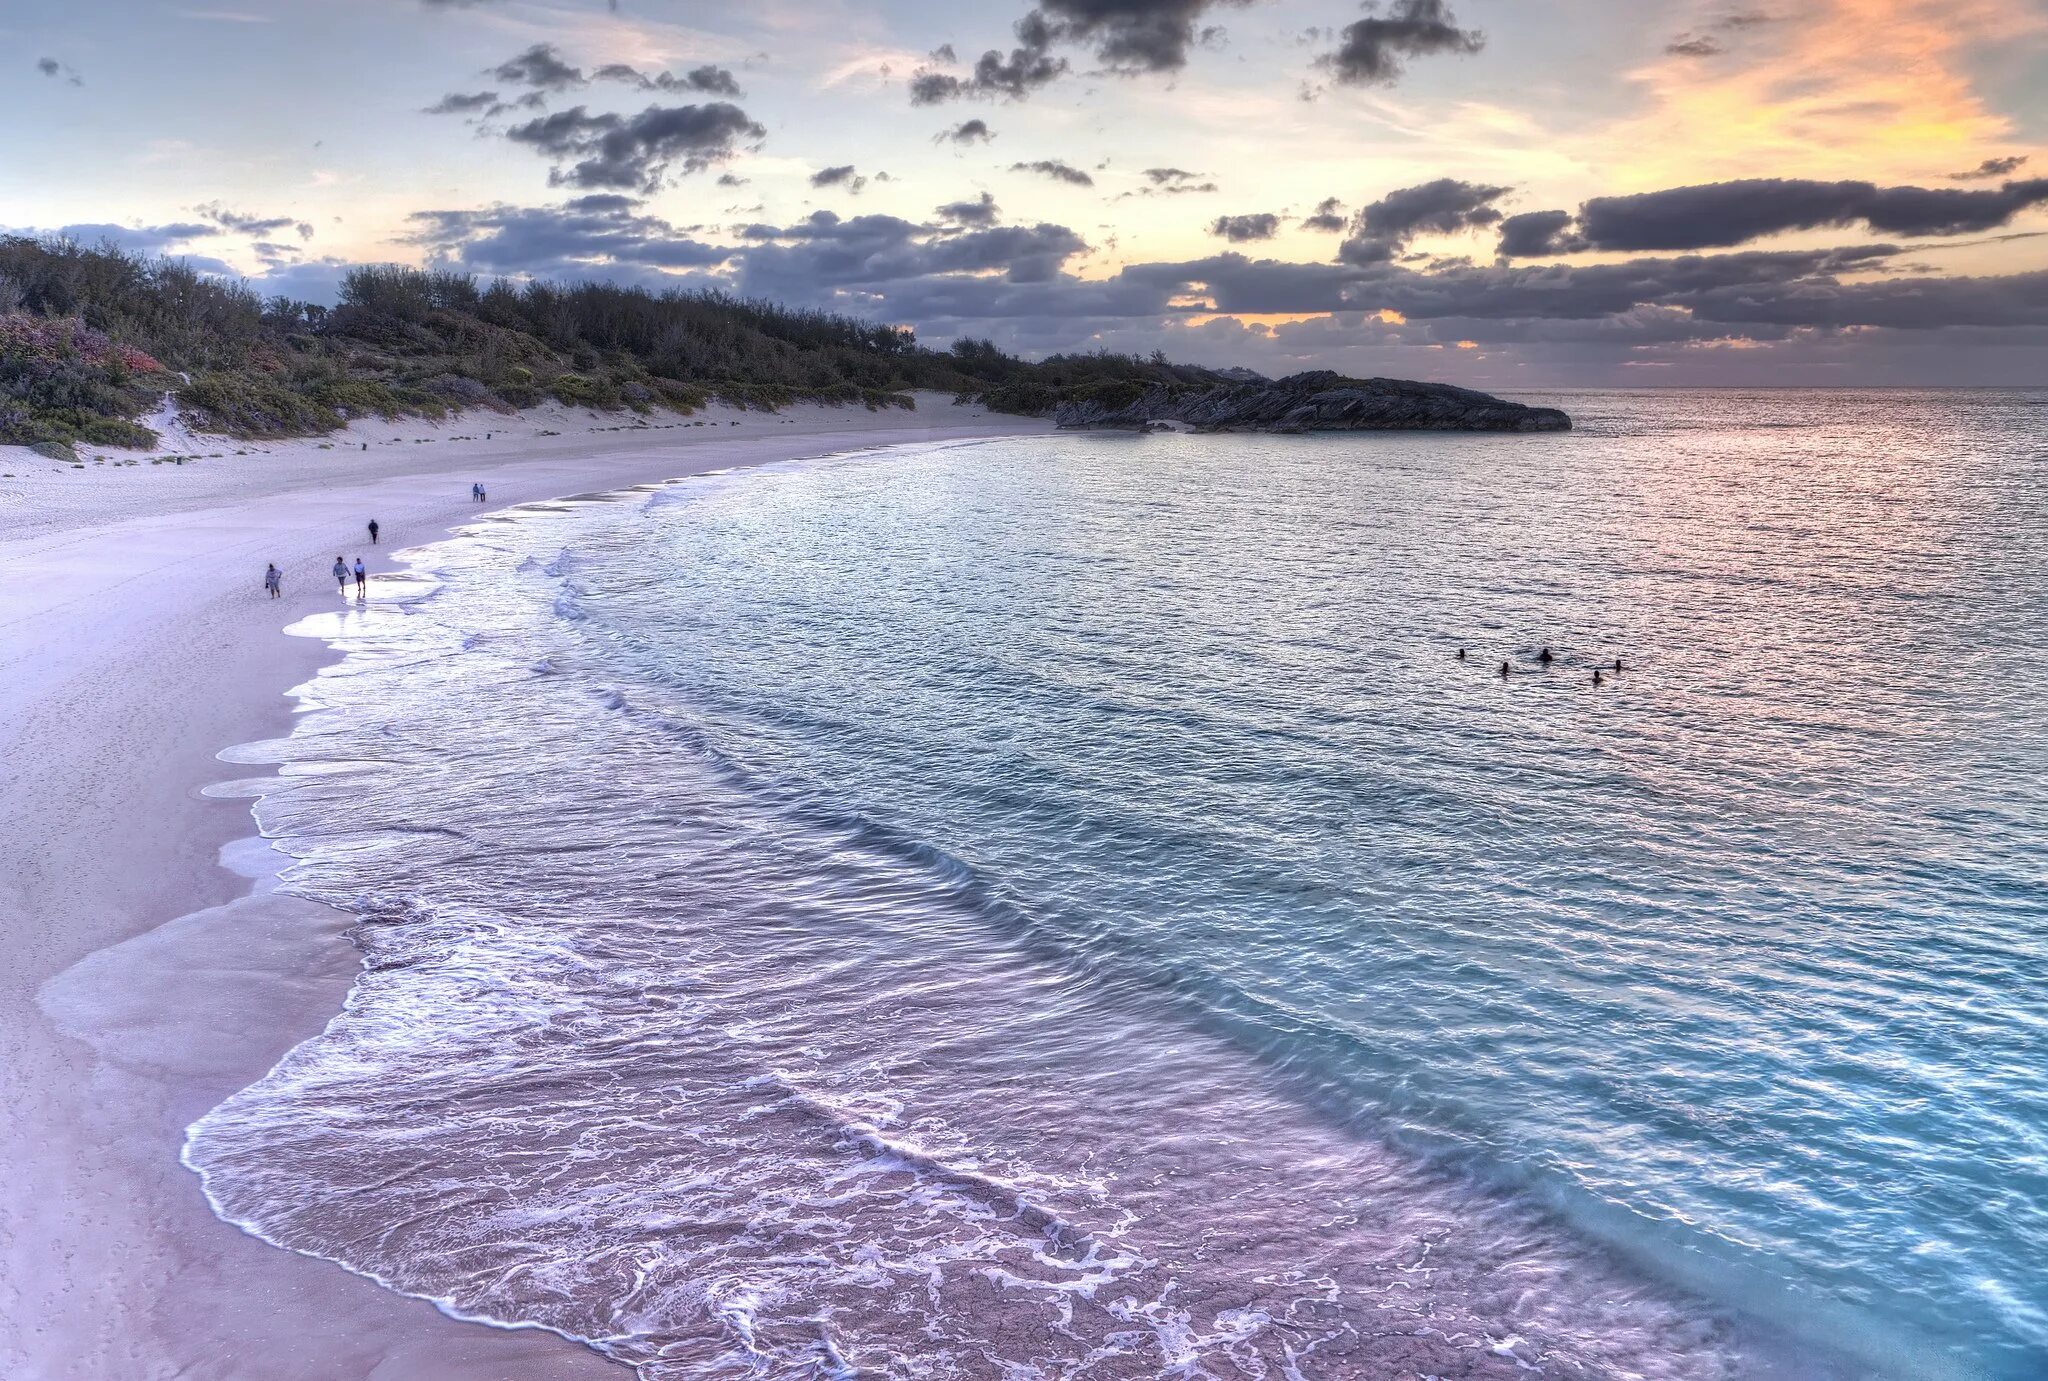 Пляж Пинк-Сэнд-Бич, Харбор, Багамские острова. Pink Sands Beach Багамские острова. Розовый пляж Пинк Сэндс Бич, Багамские острова. Розовый пляж. Остров Харбор, Багамы. Harbor island